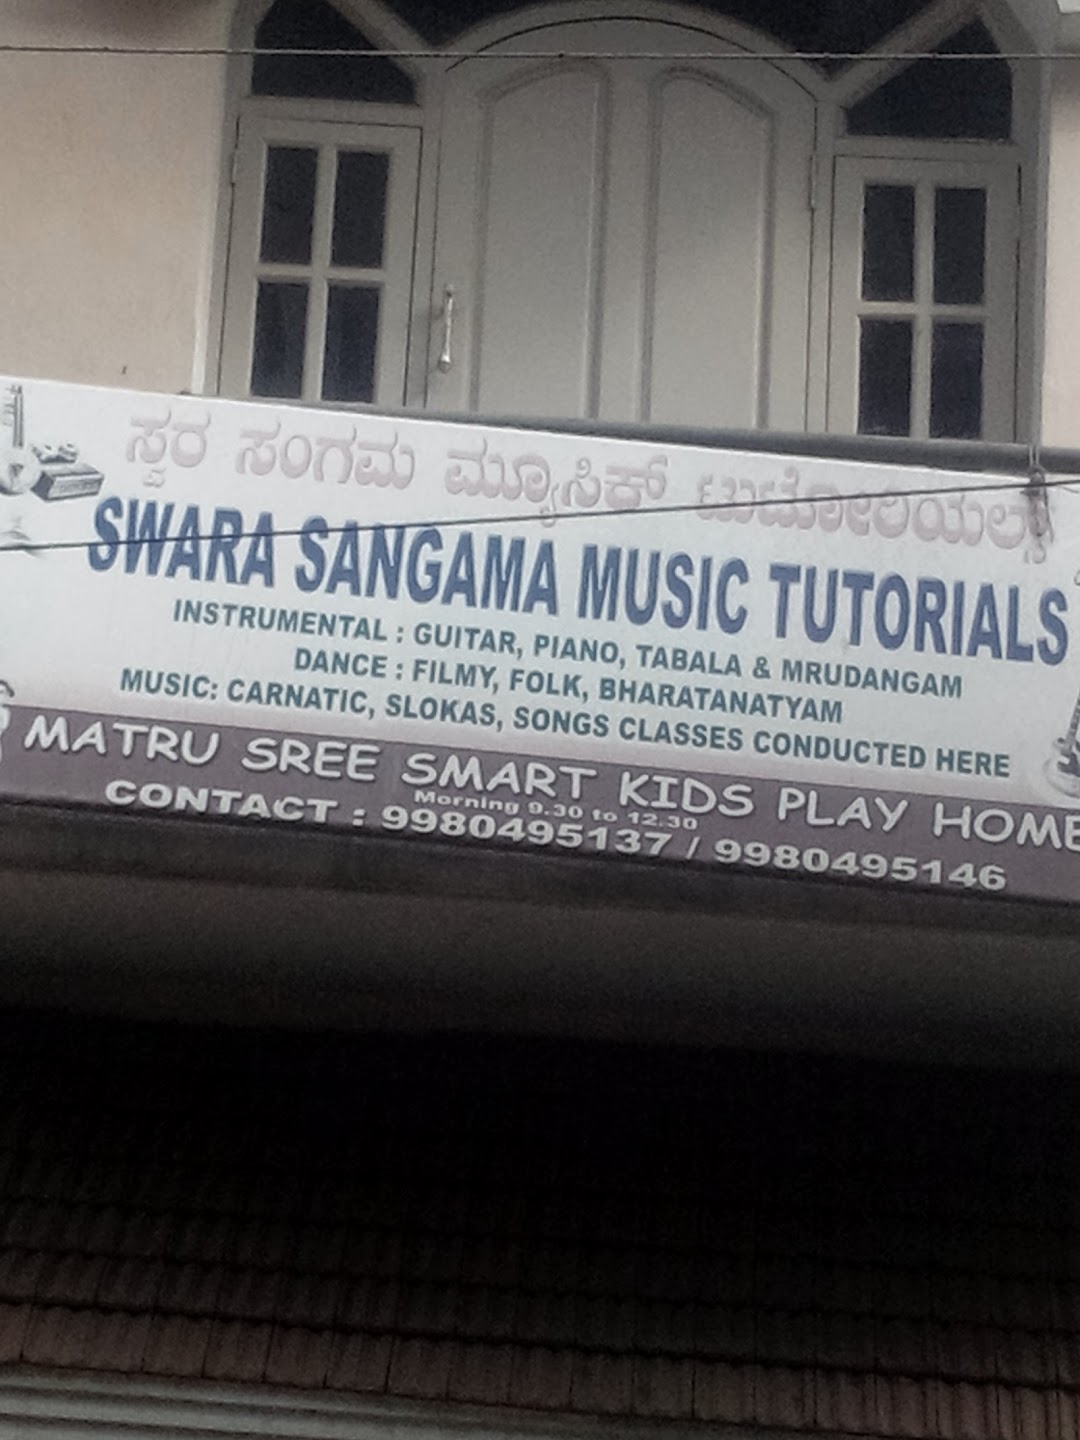 Swara Sangama Music Tutorials